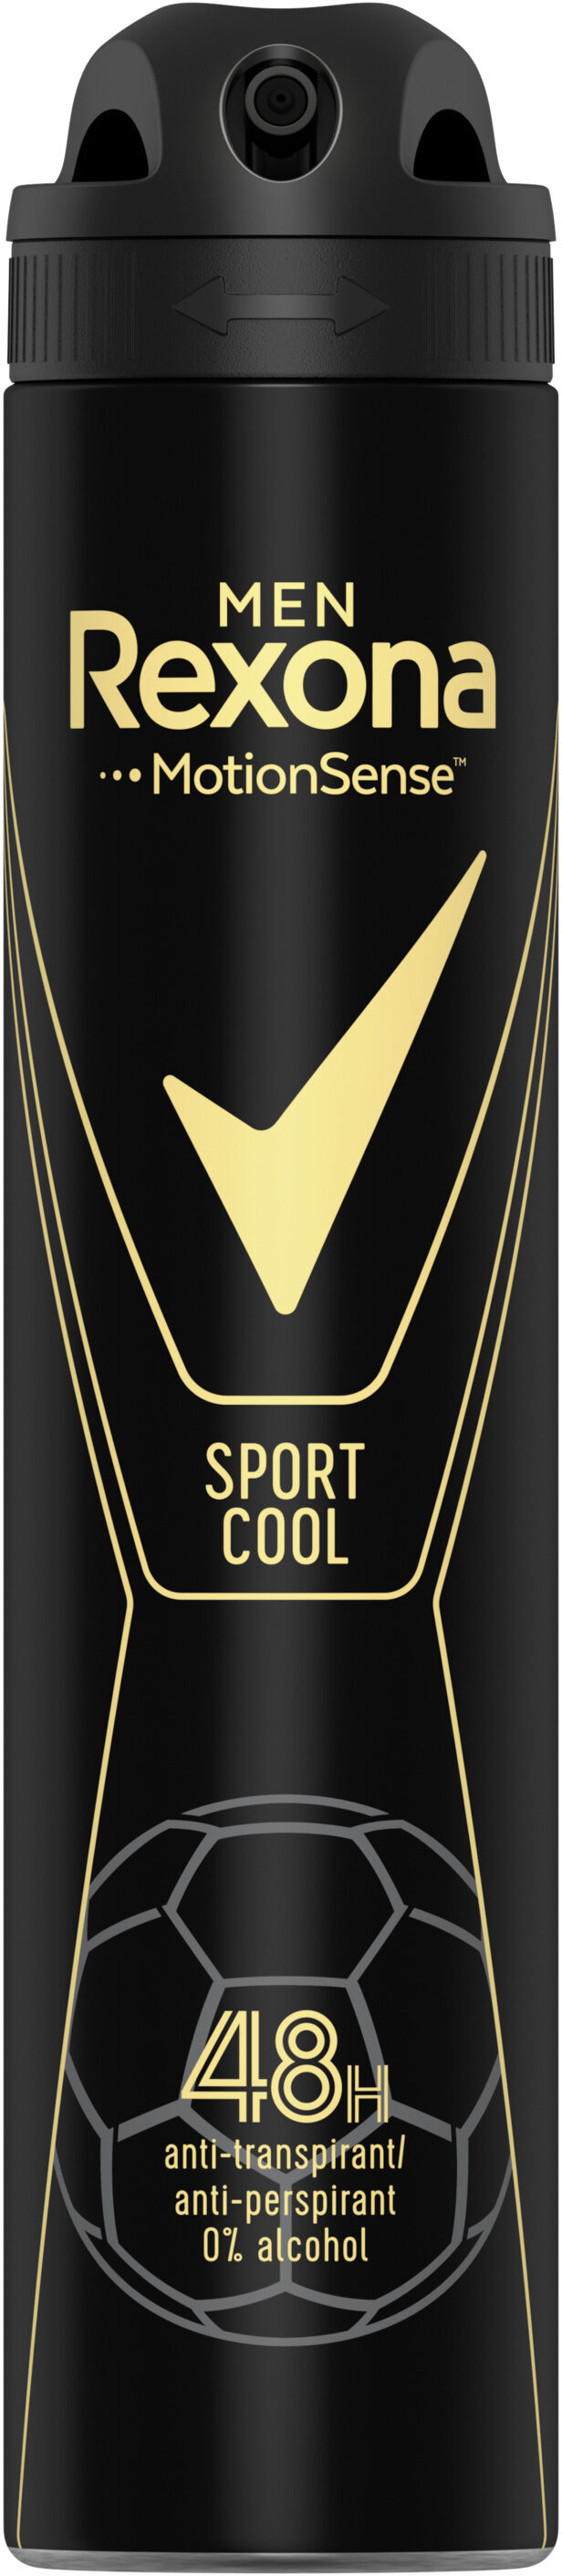 REXONA MEN Déodorant Homme Spray Anti-Transpirant Sport Cool 200ml - Tuote - fr